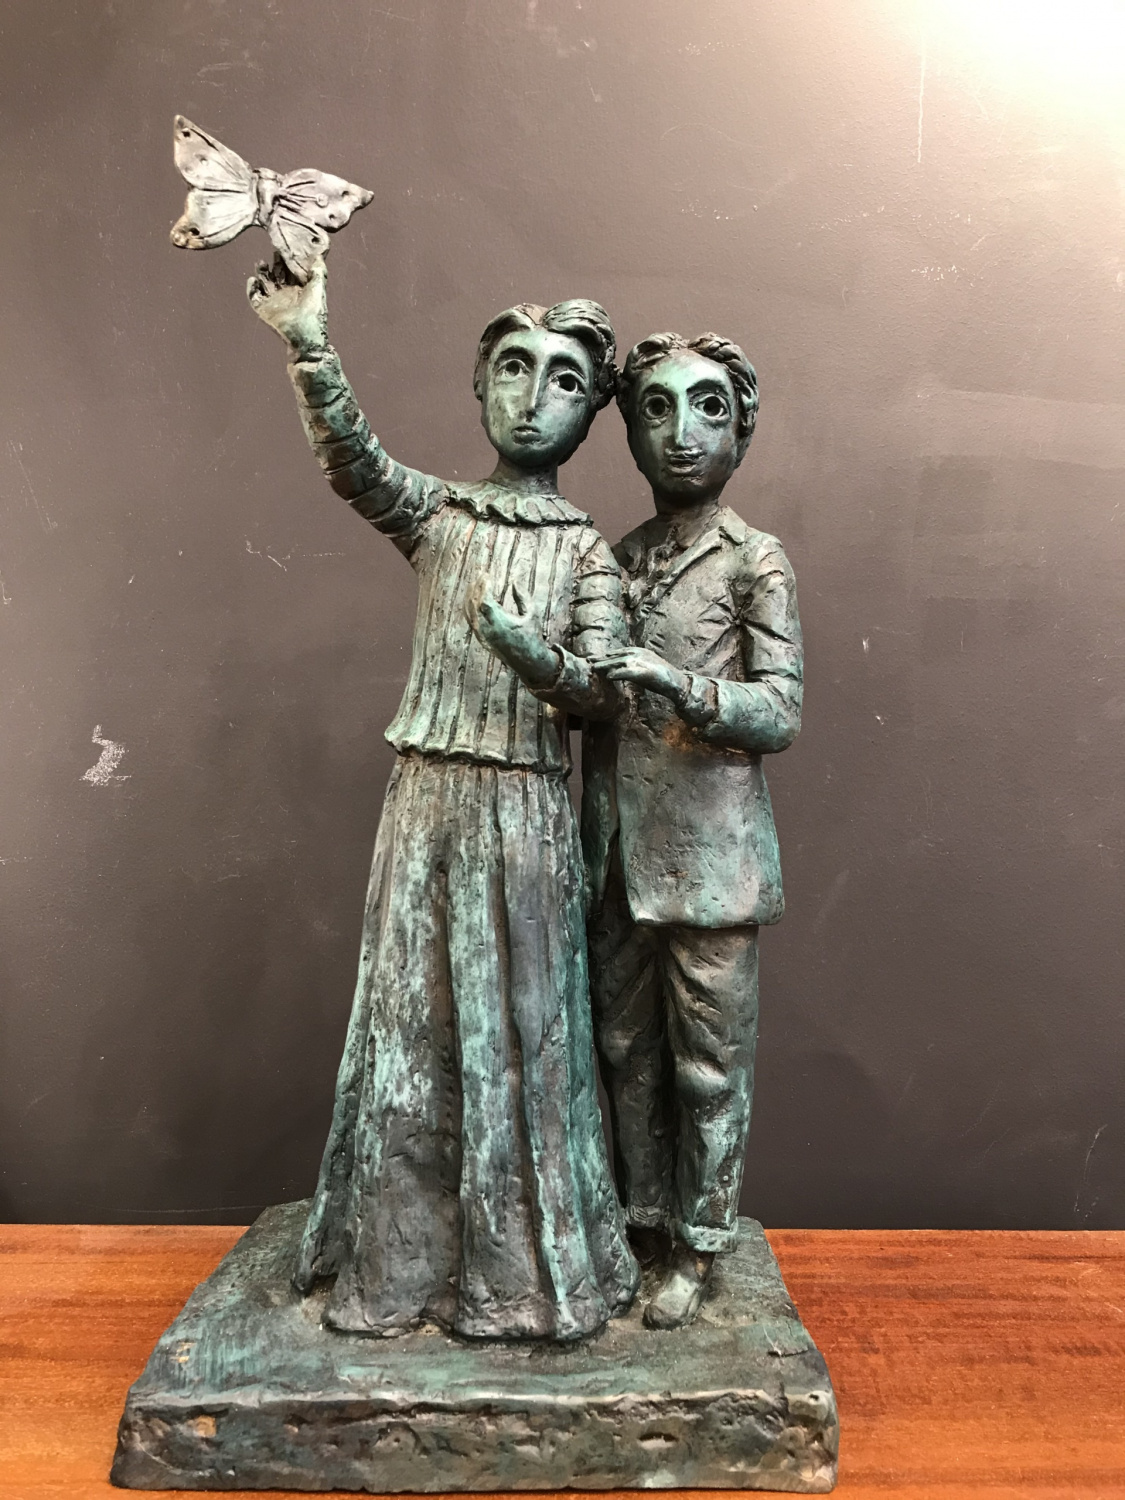 Yosl Bergner - Boy and Girl - Bronze sculpture - Jerusalem art - Kings Gallery - Israeli gallery - Jerusalem - International art.